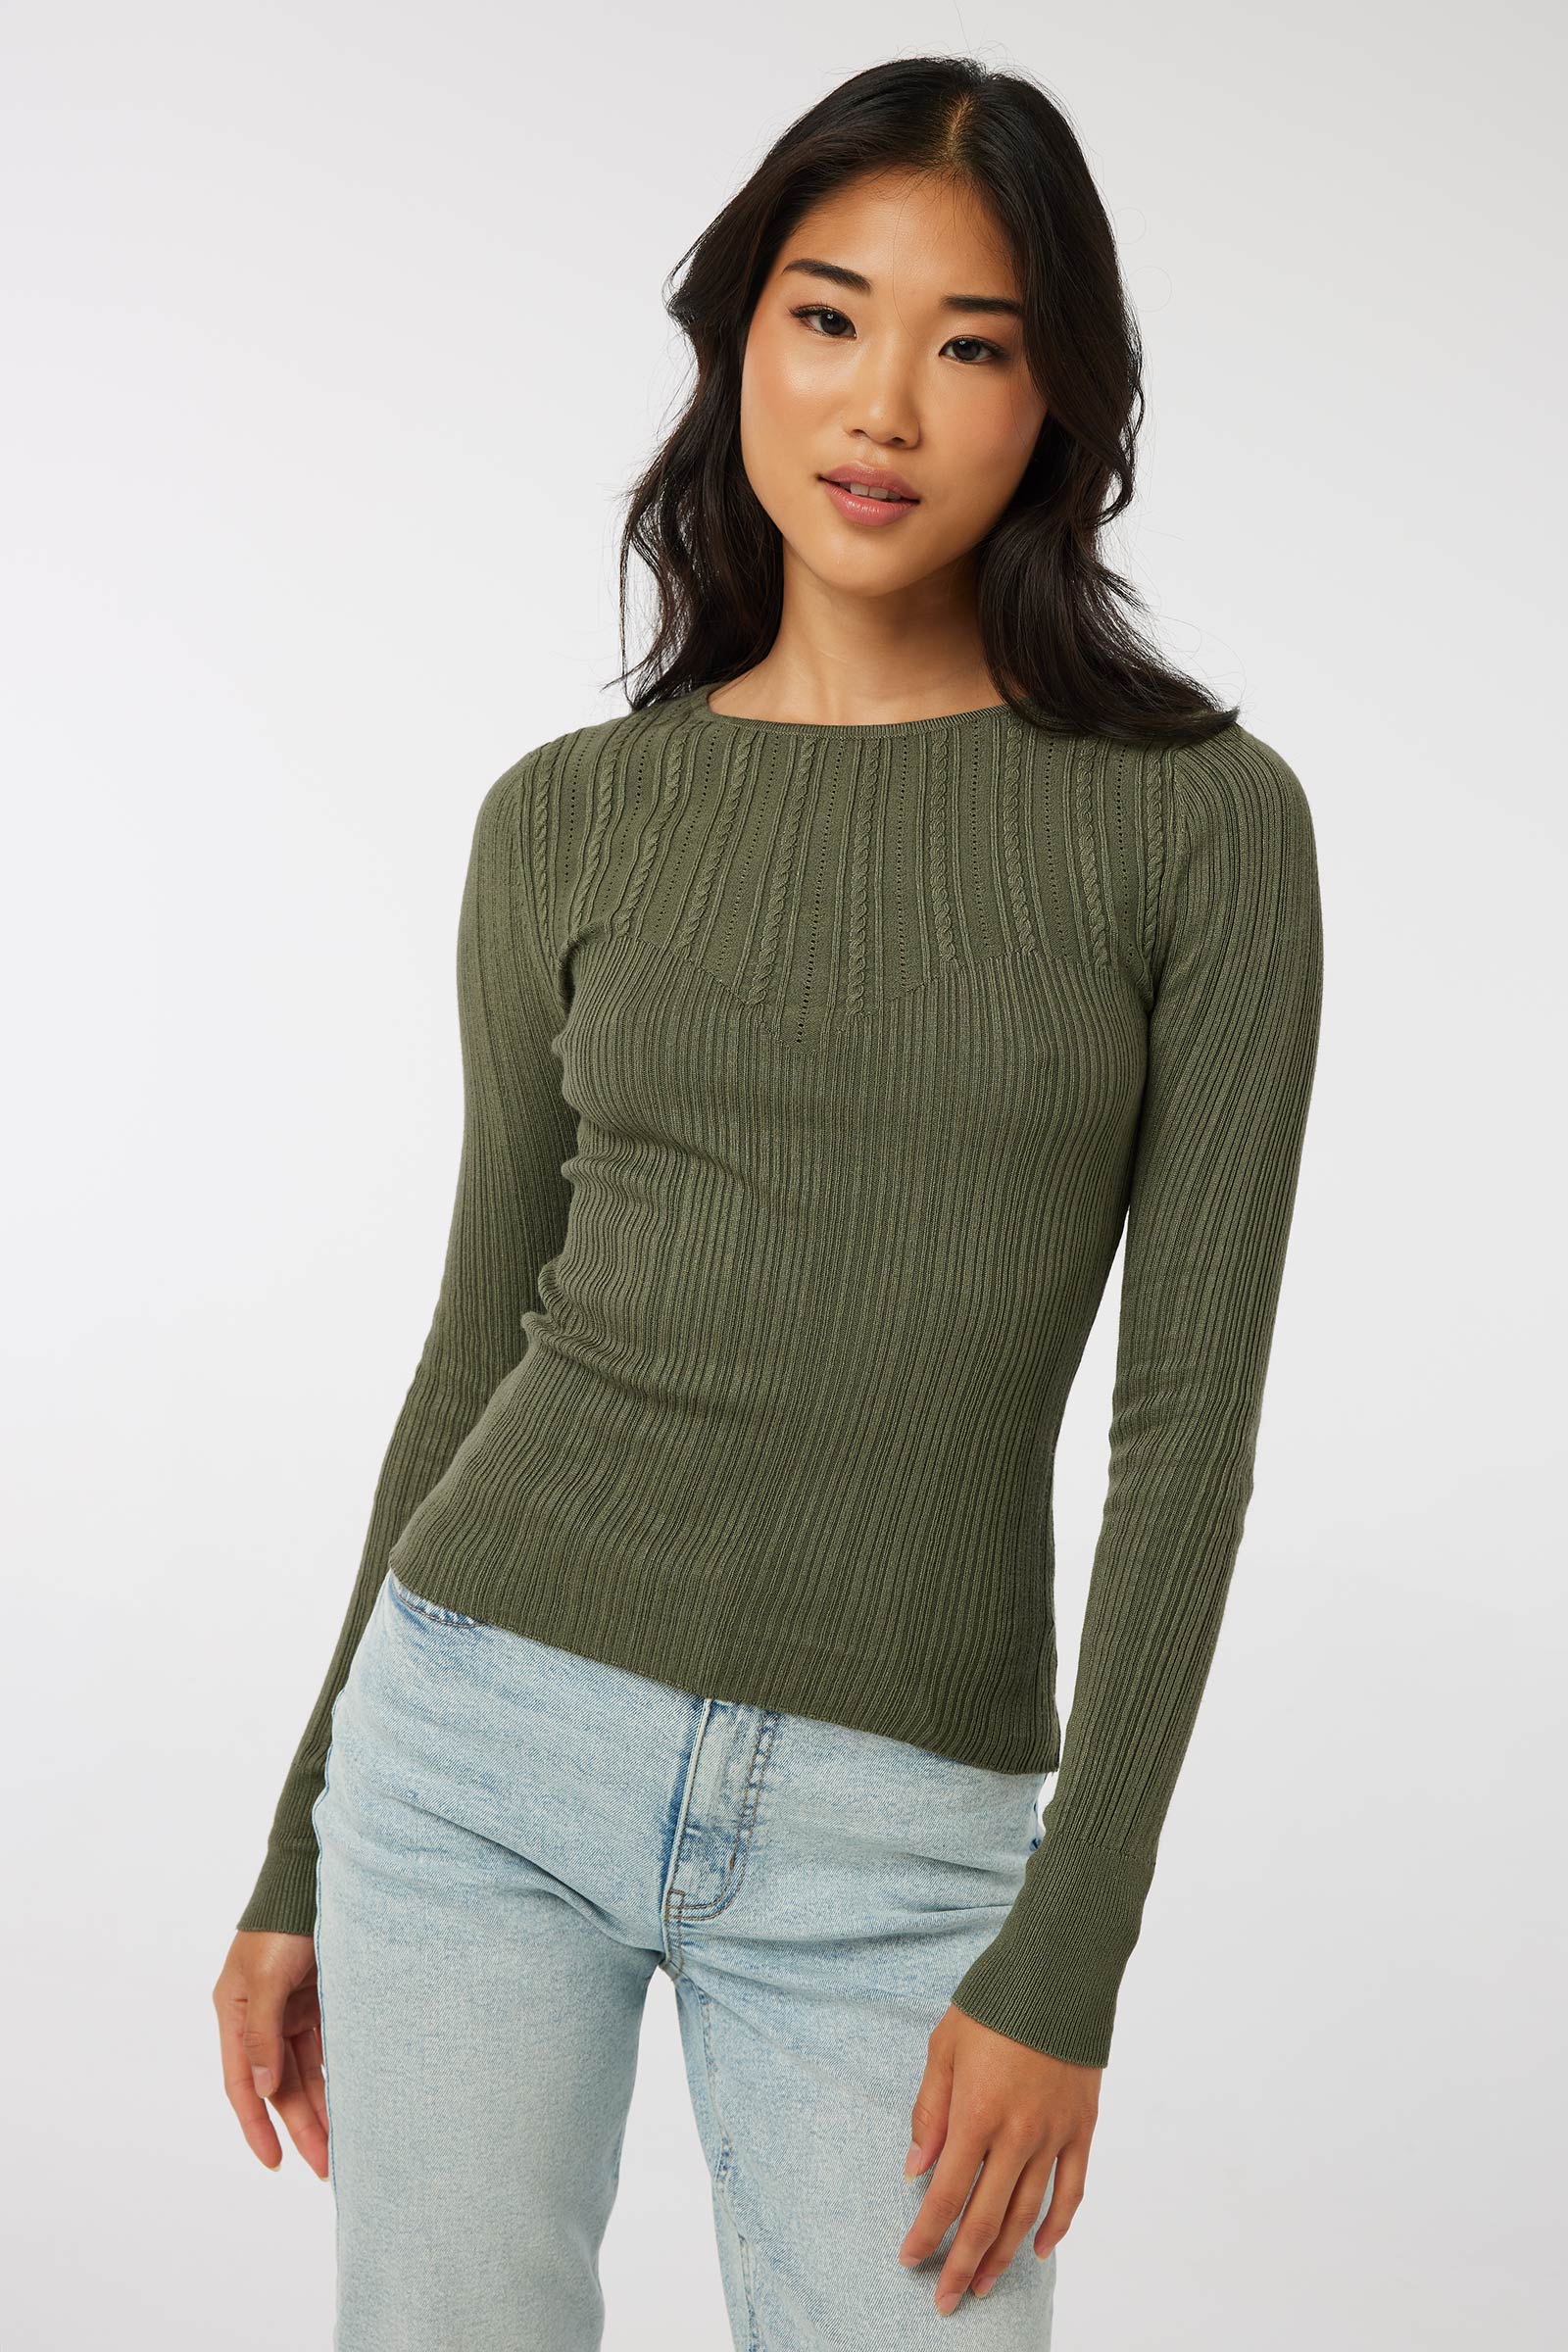 Ardene Bustier-Like Fine Knit Sweater in Khaki | Size Large | Polyester/Rayon